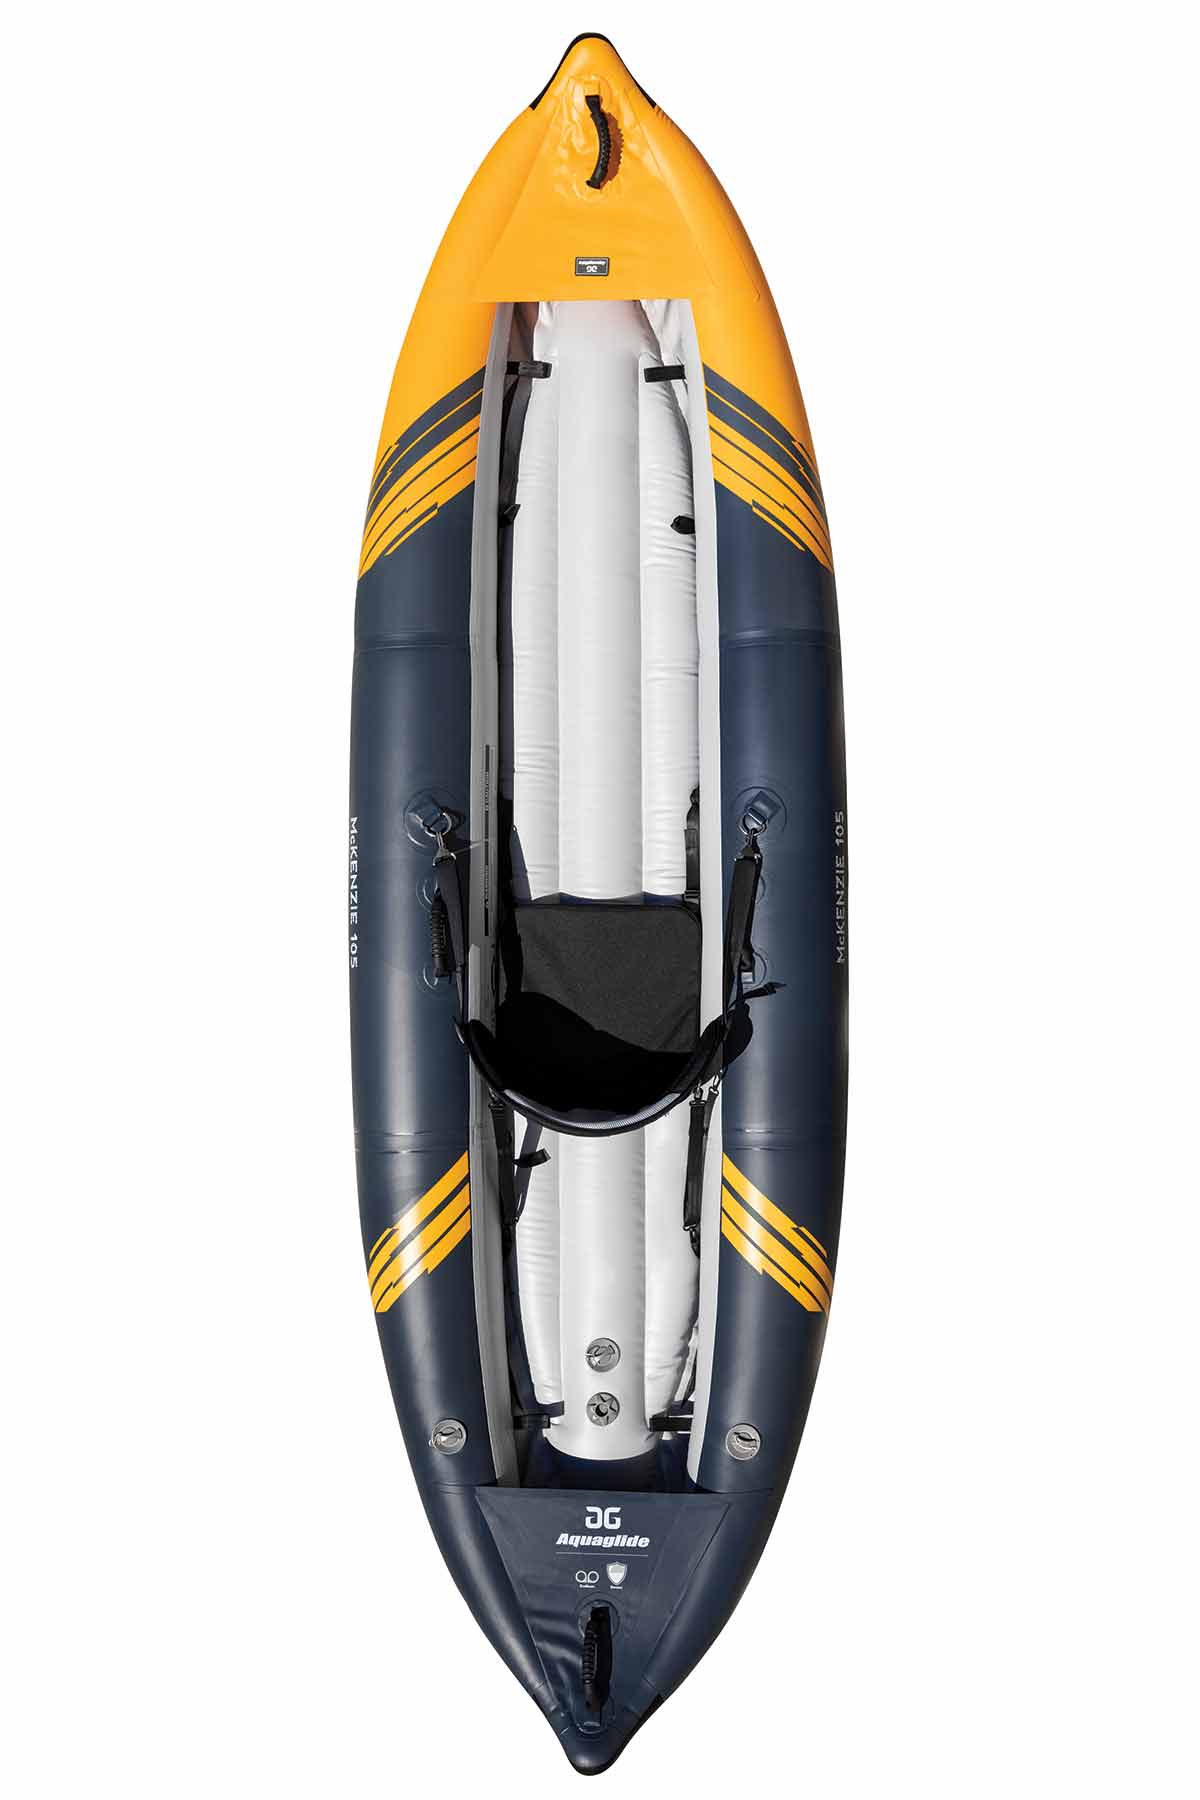 Aquaglide McKenzie 105 Whitewater Inflatable Kayak Top View